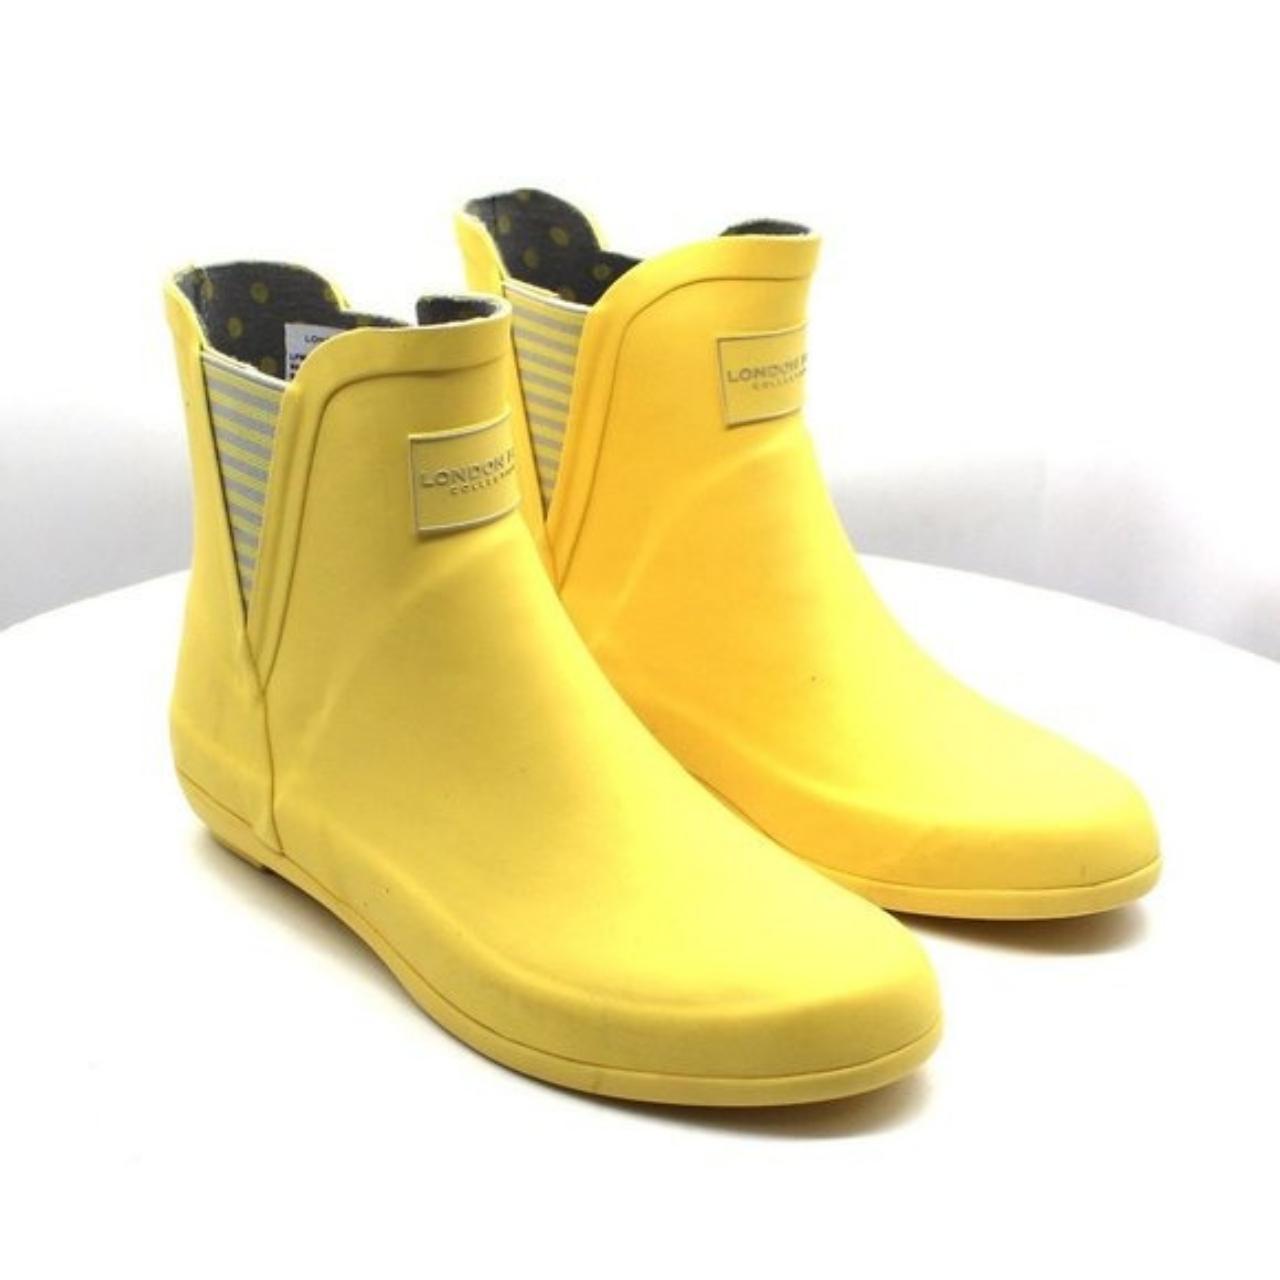 London Fog Women's Yellow Boots